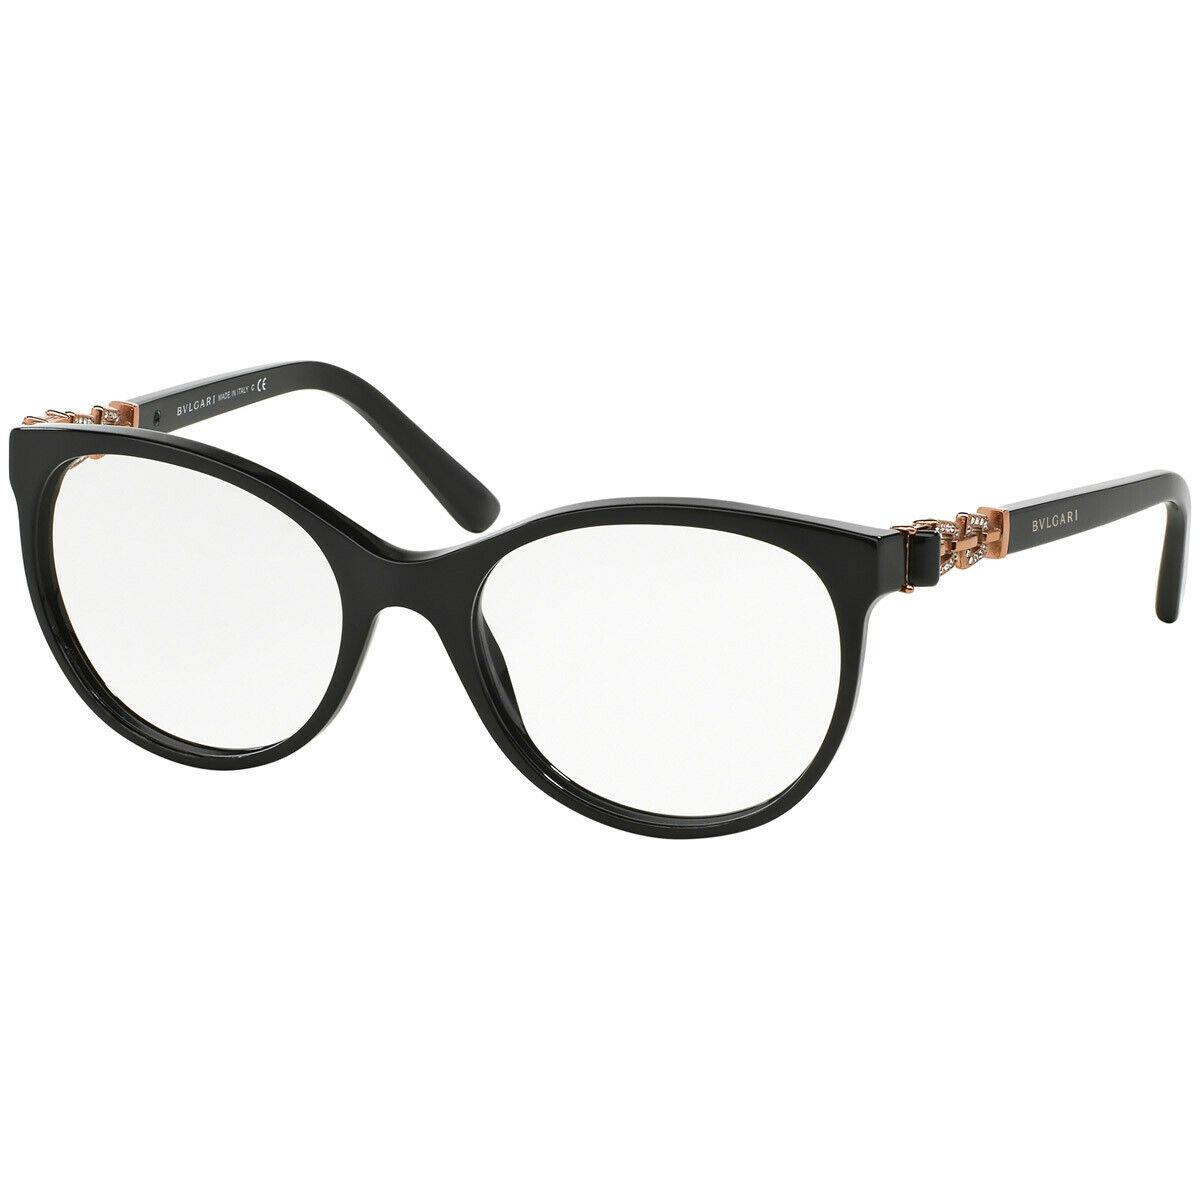 Bvlgari eyeglasses  - Black Frame 1